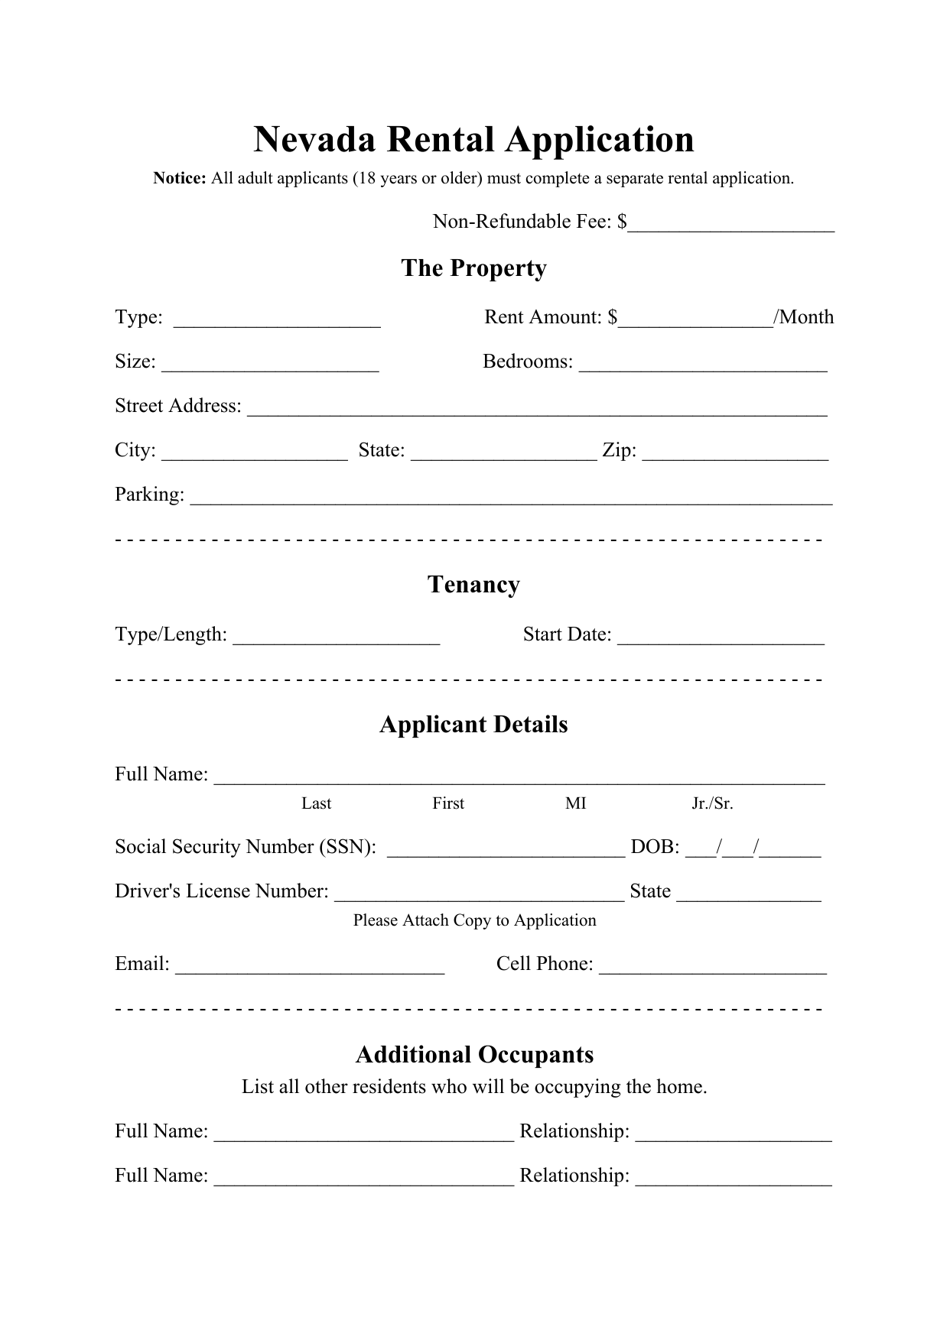 Rental Application Form - Nevada, Page 1